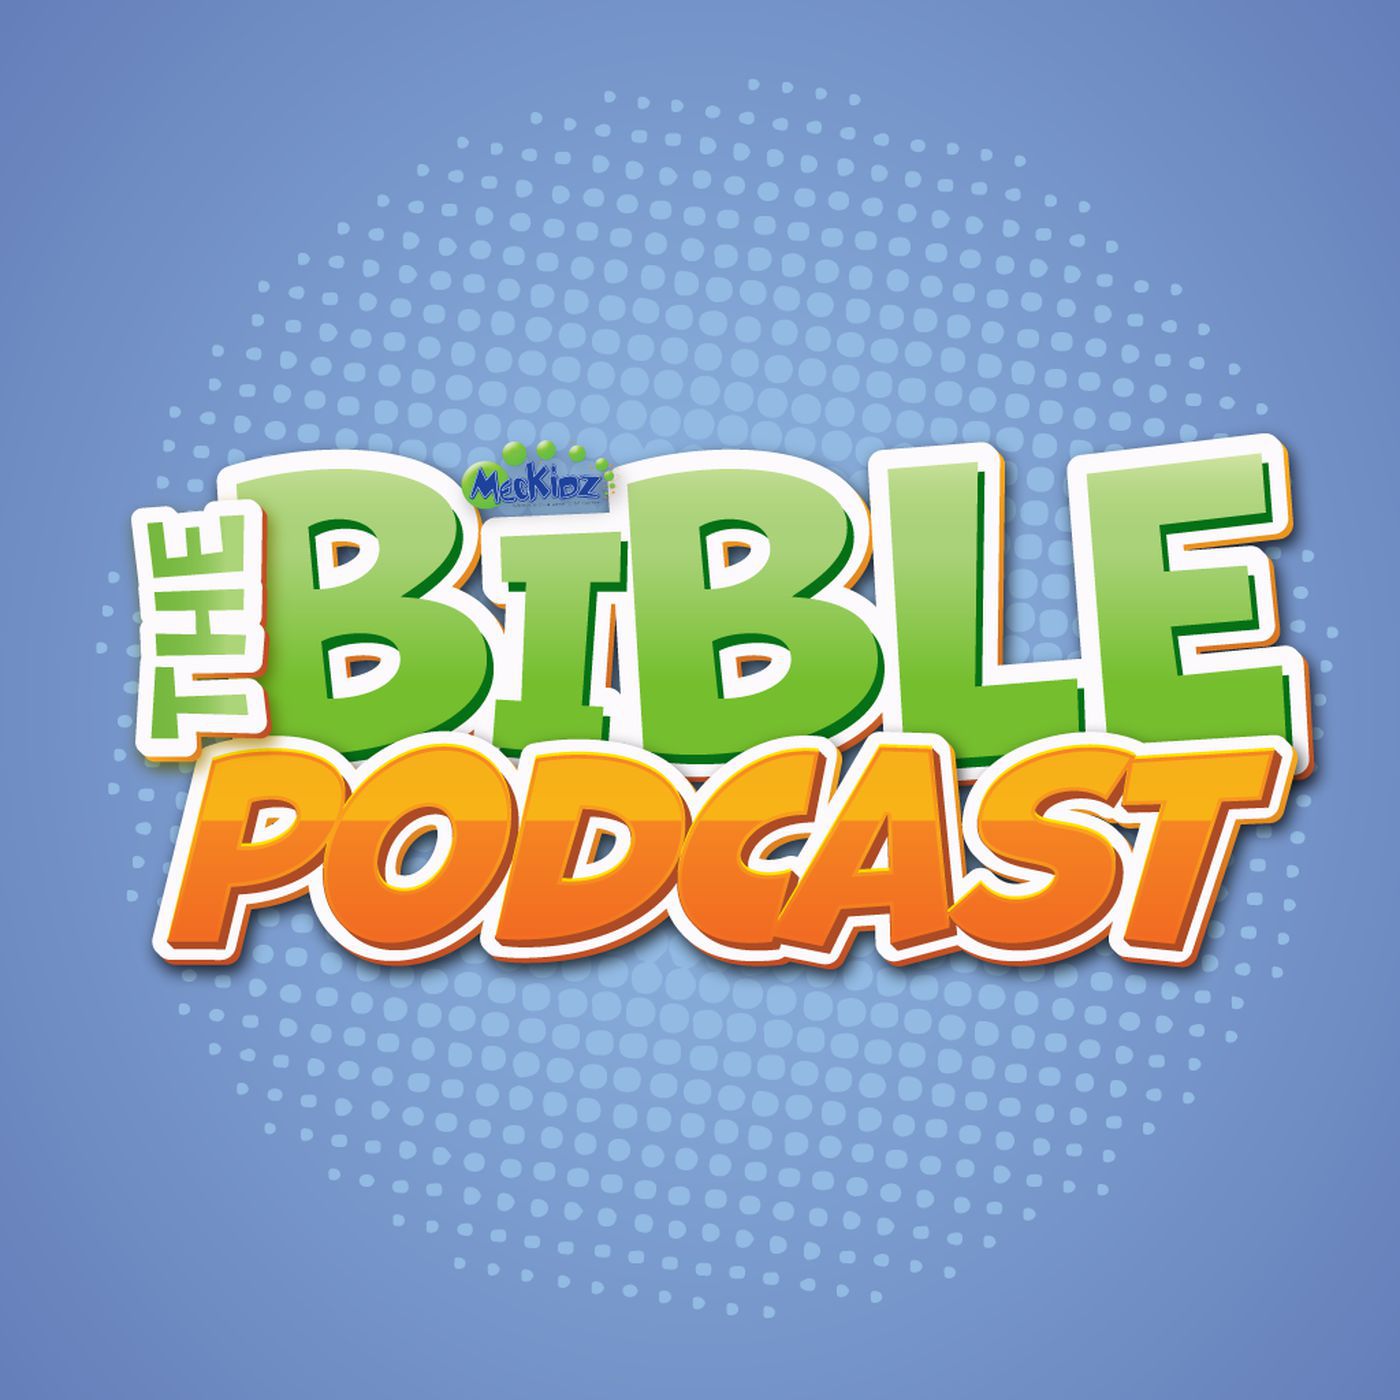 MecKidz Bible Podcast